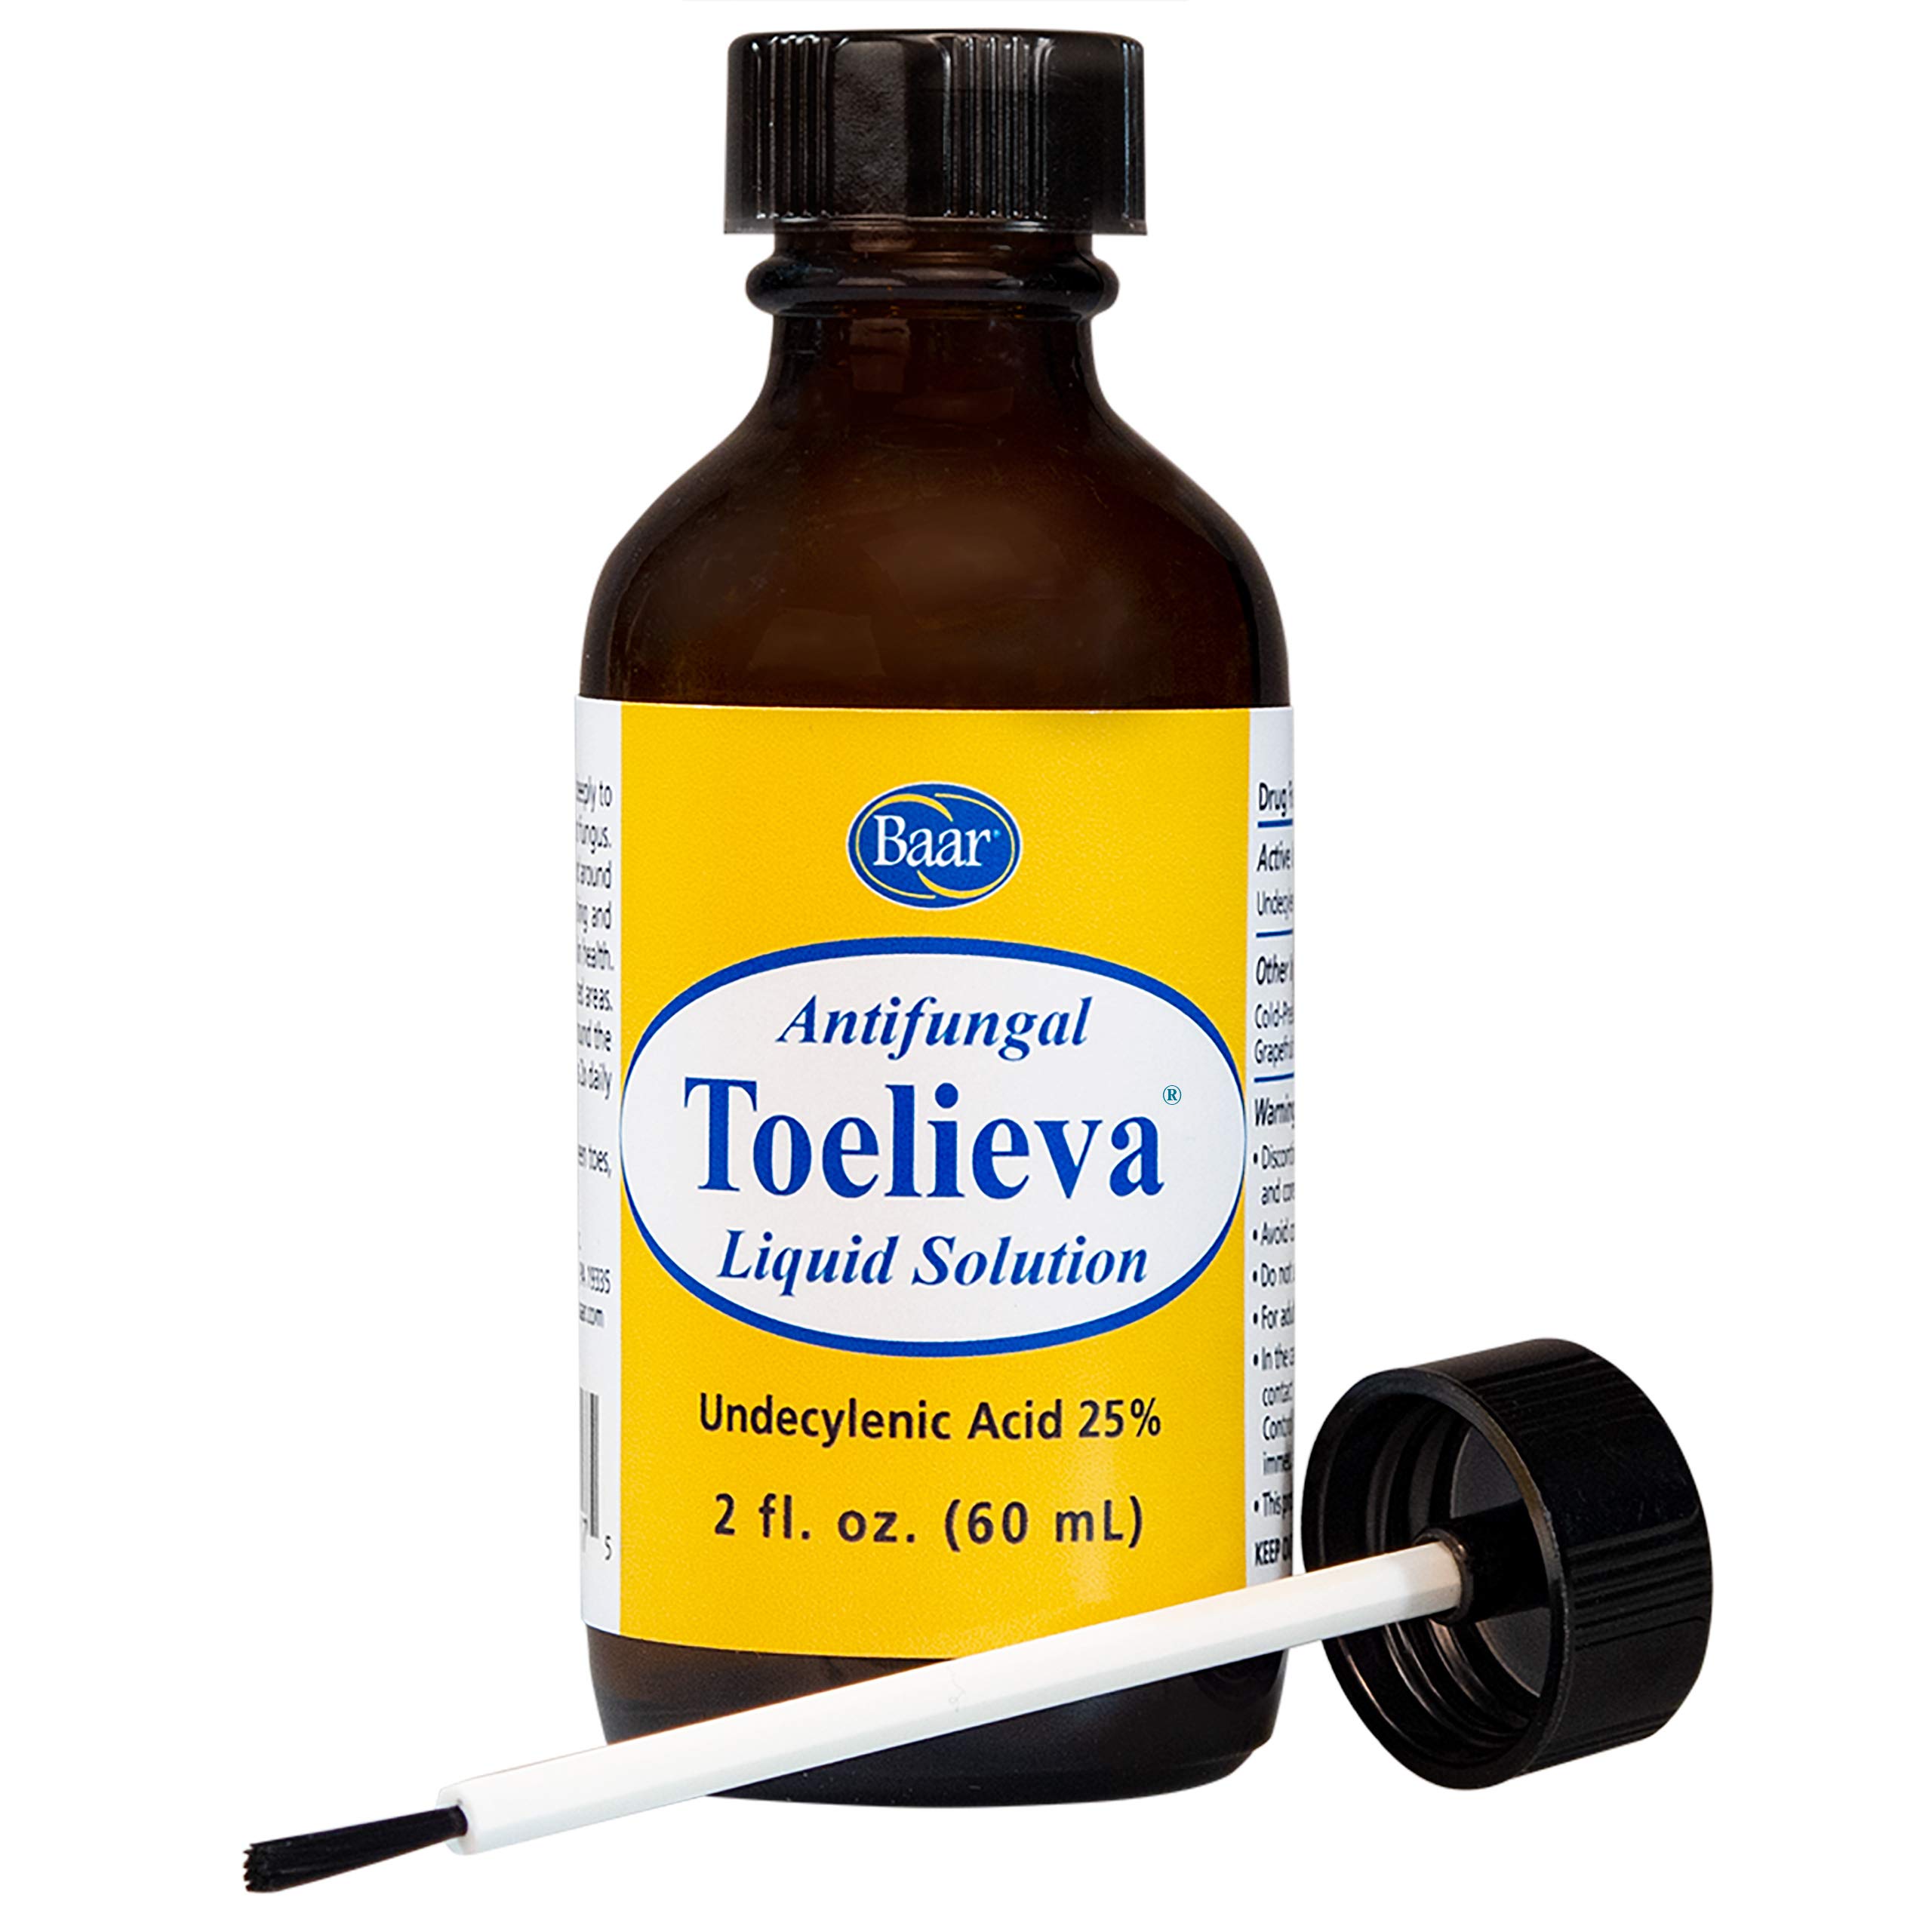 Baar Products - Toelieva Antifungal Liquid Solution - 25% Undecylenic Acid, Organic Olive Oil, Grapefruit Seed Extract - Maximum